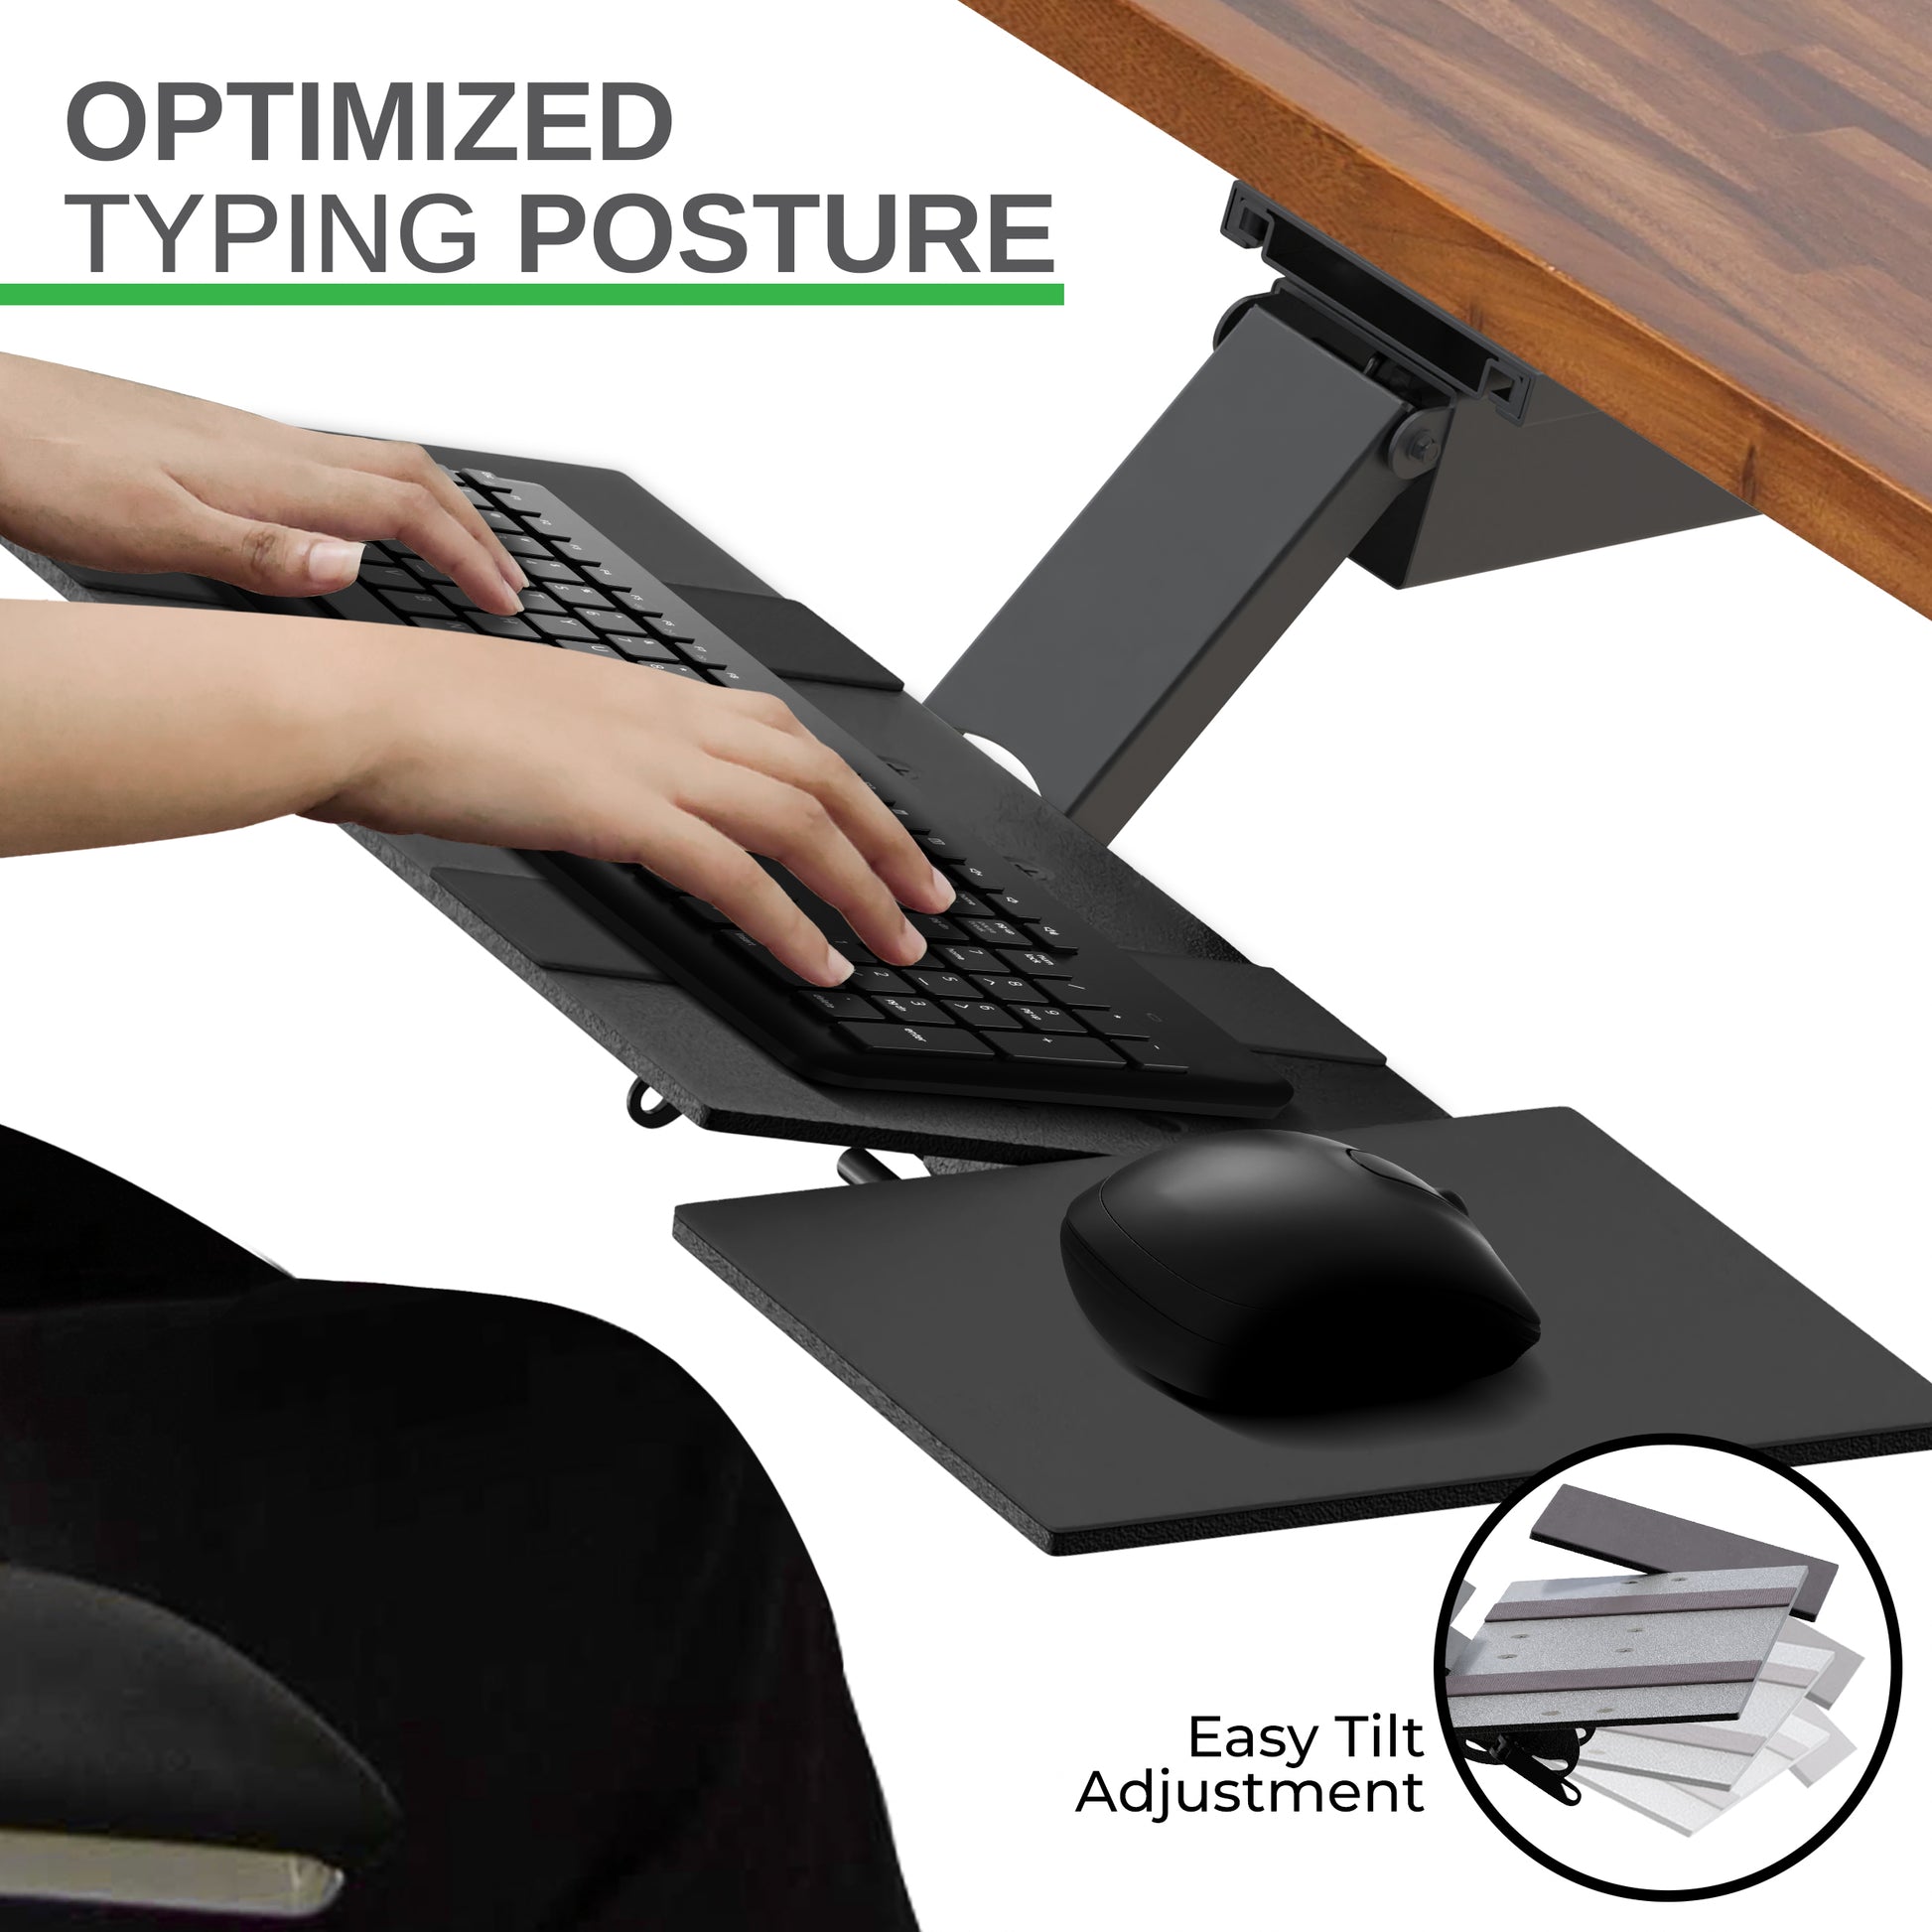 KT2 Ergonomic Sit Stand Under-Desk Computer Keyboard Tray for